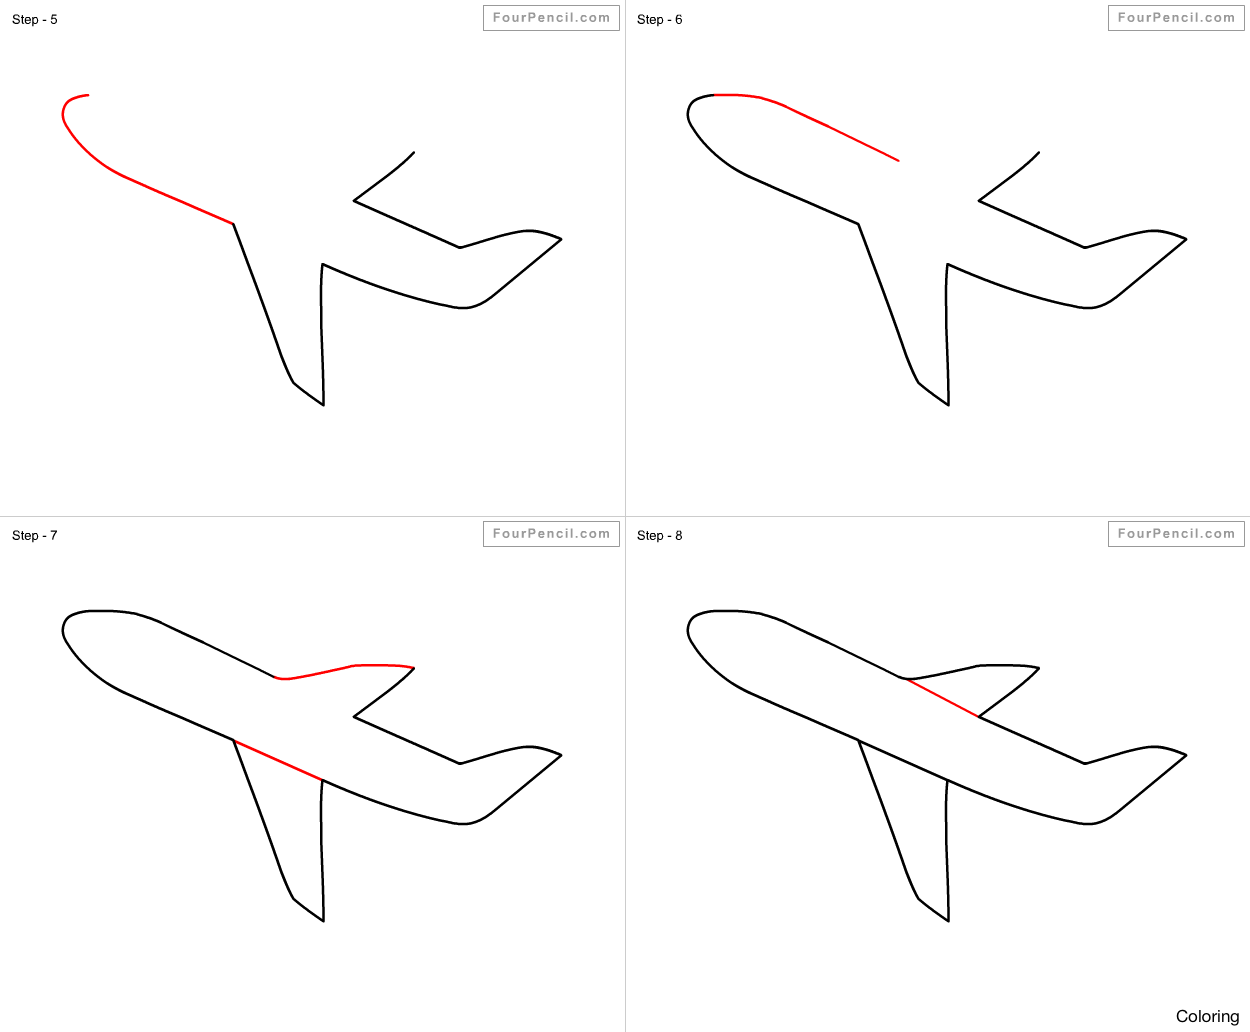 simple airplane drawing step by step